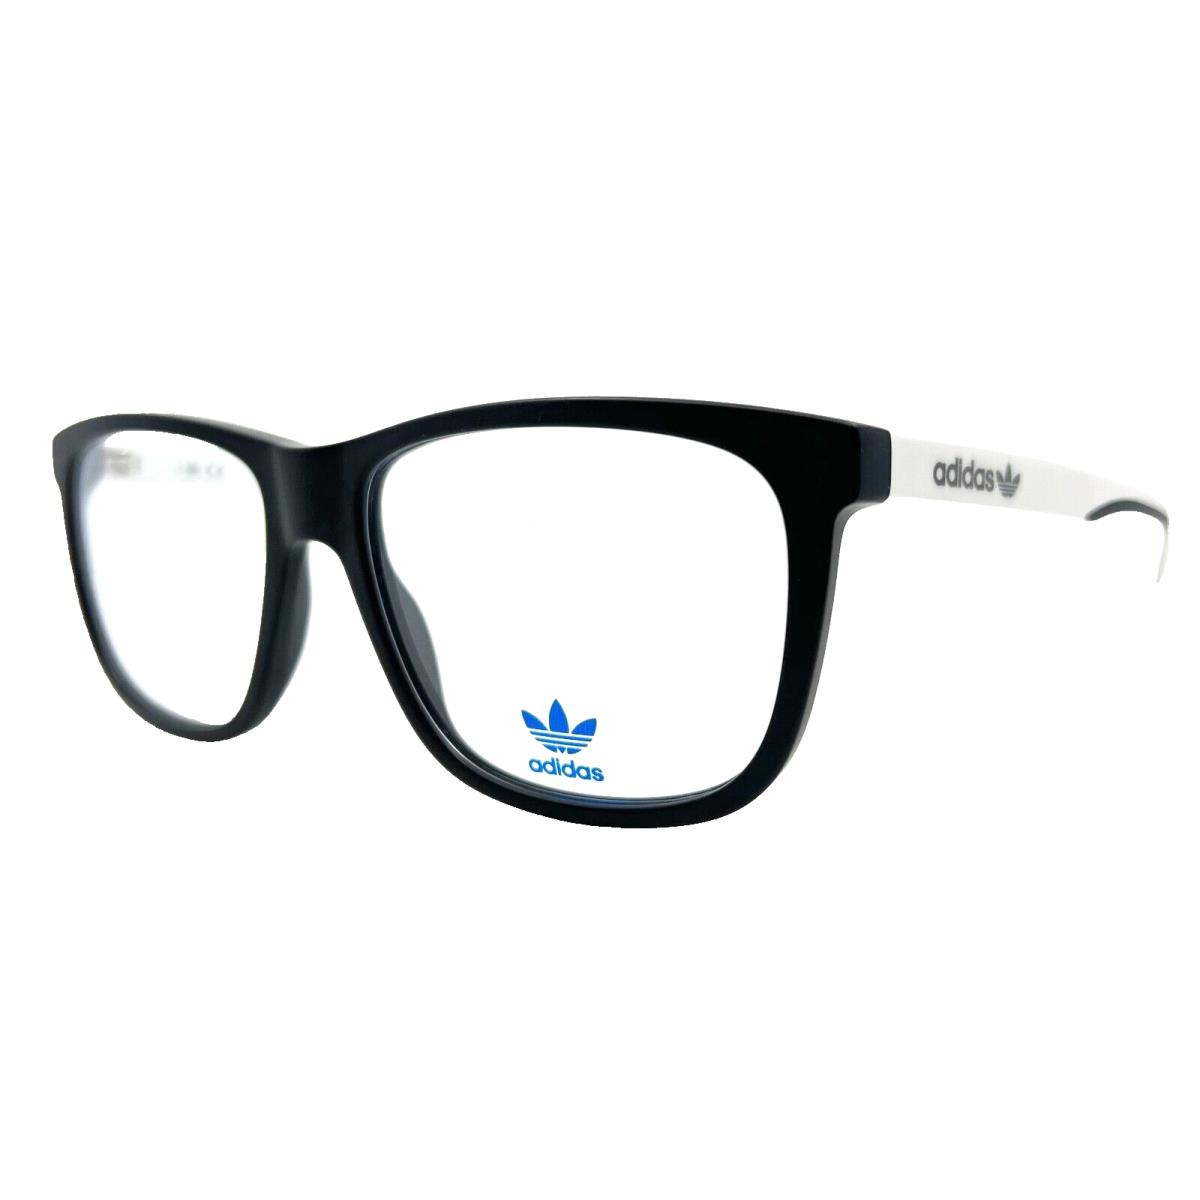 Adidas Originals - OR5012 002 56/16/145 - Black Eyeglasses Case